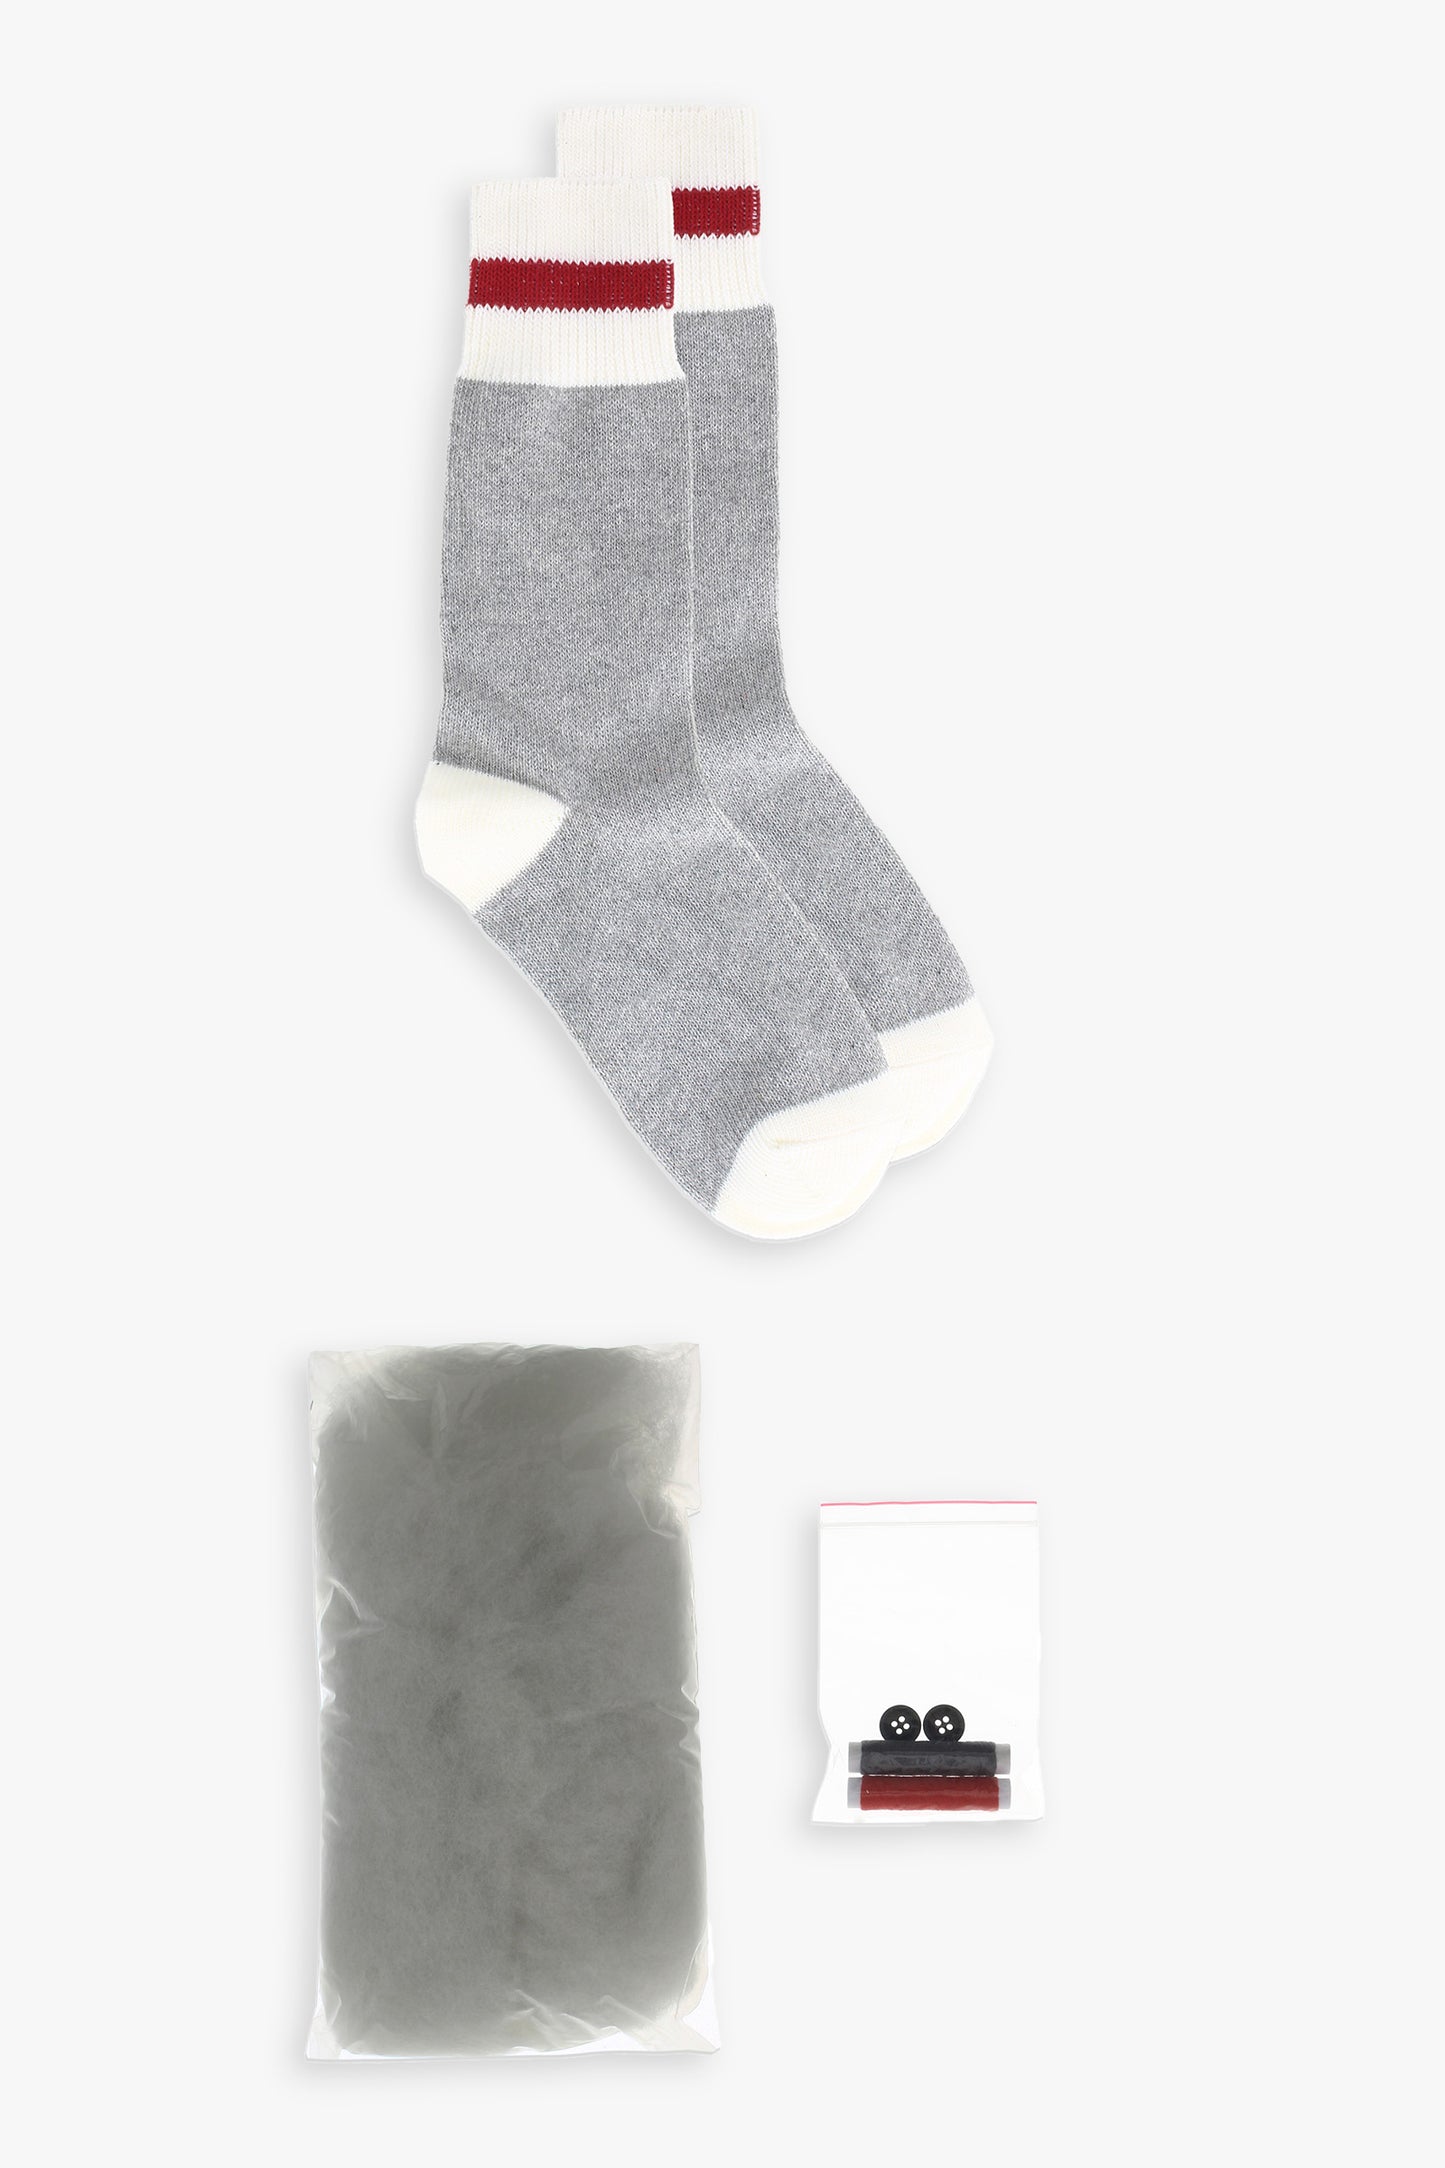 DIY Craft Sock Monkey Kit With Video Tutorial